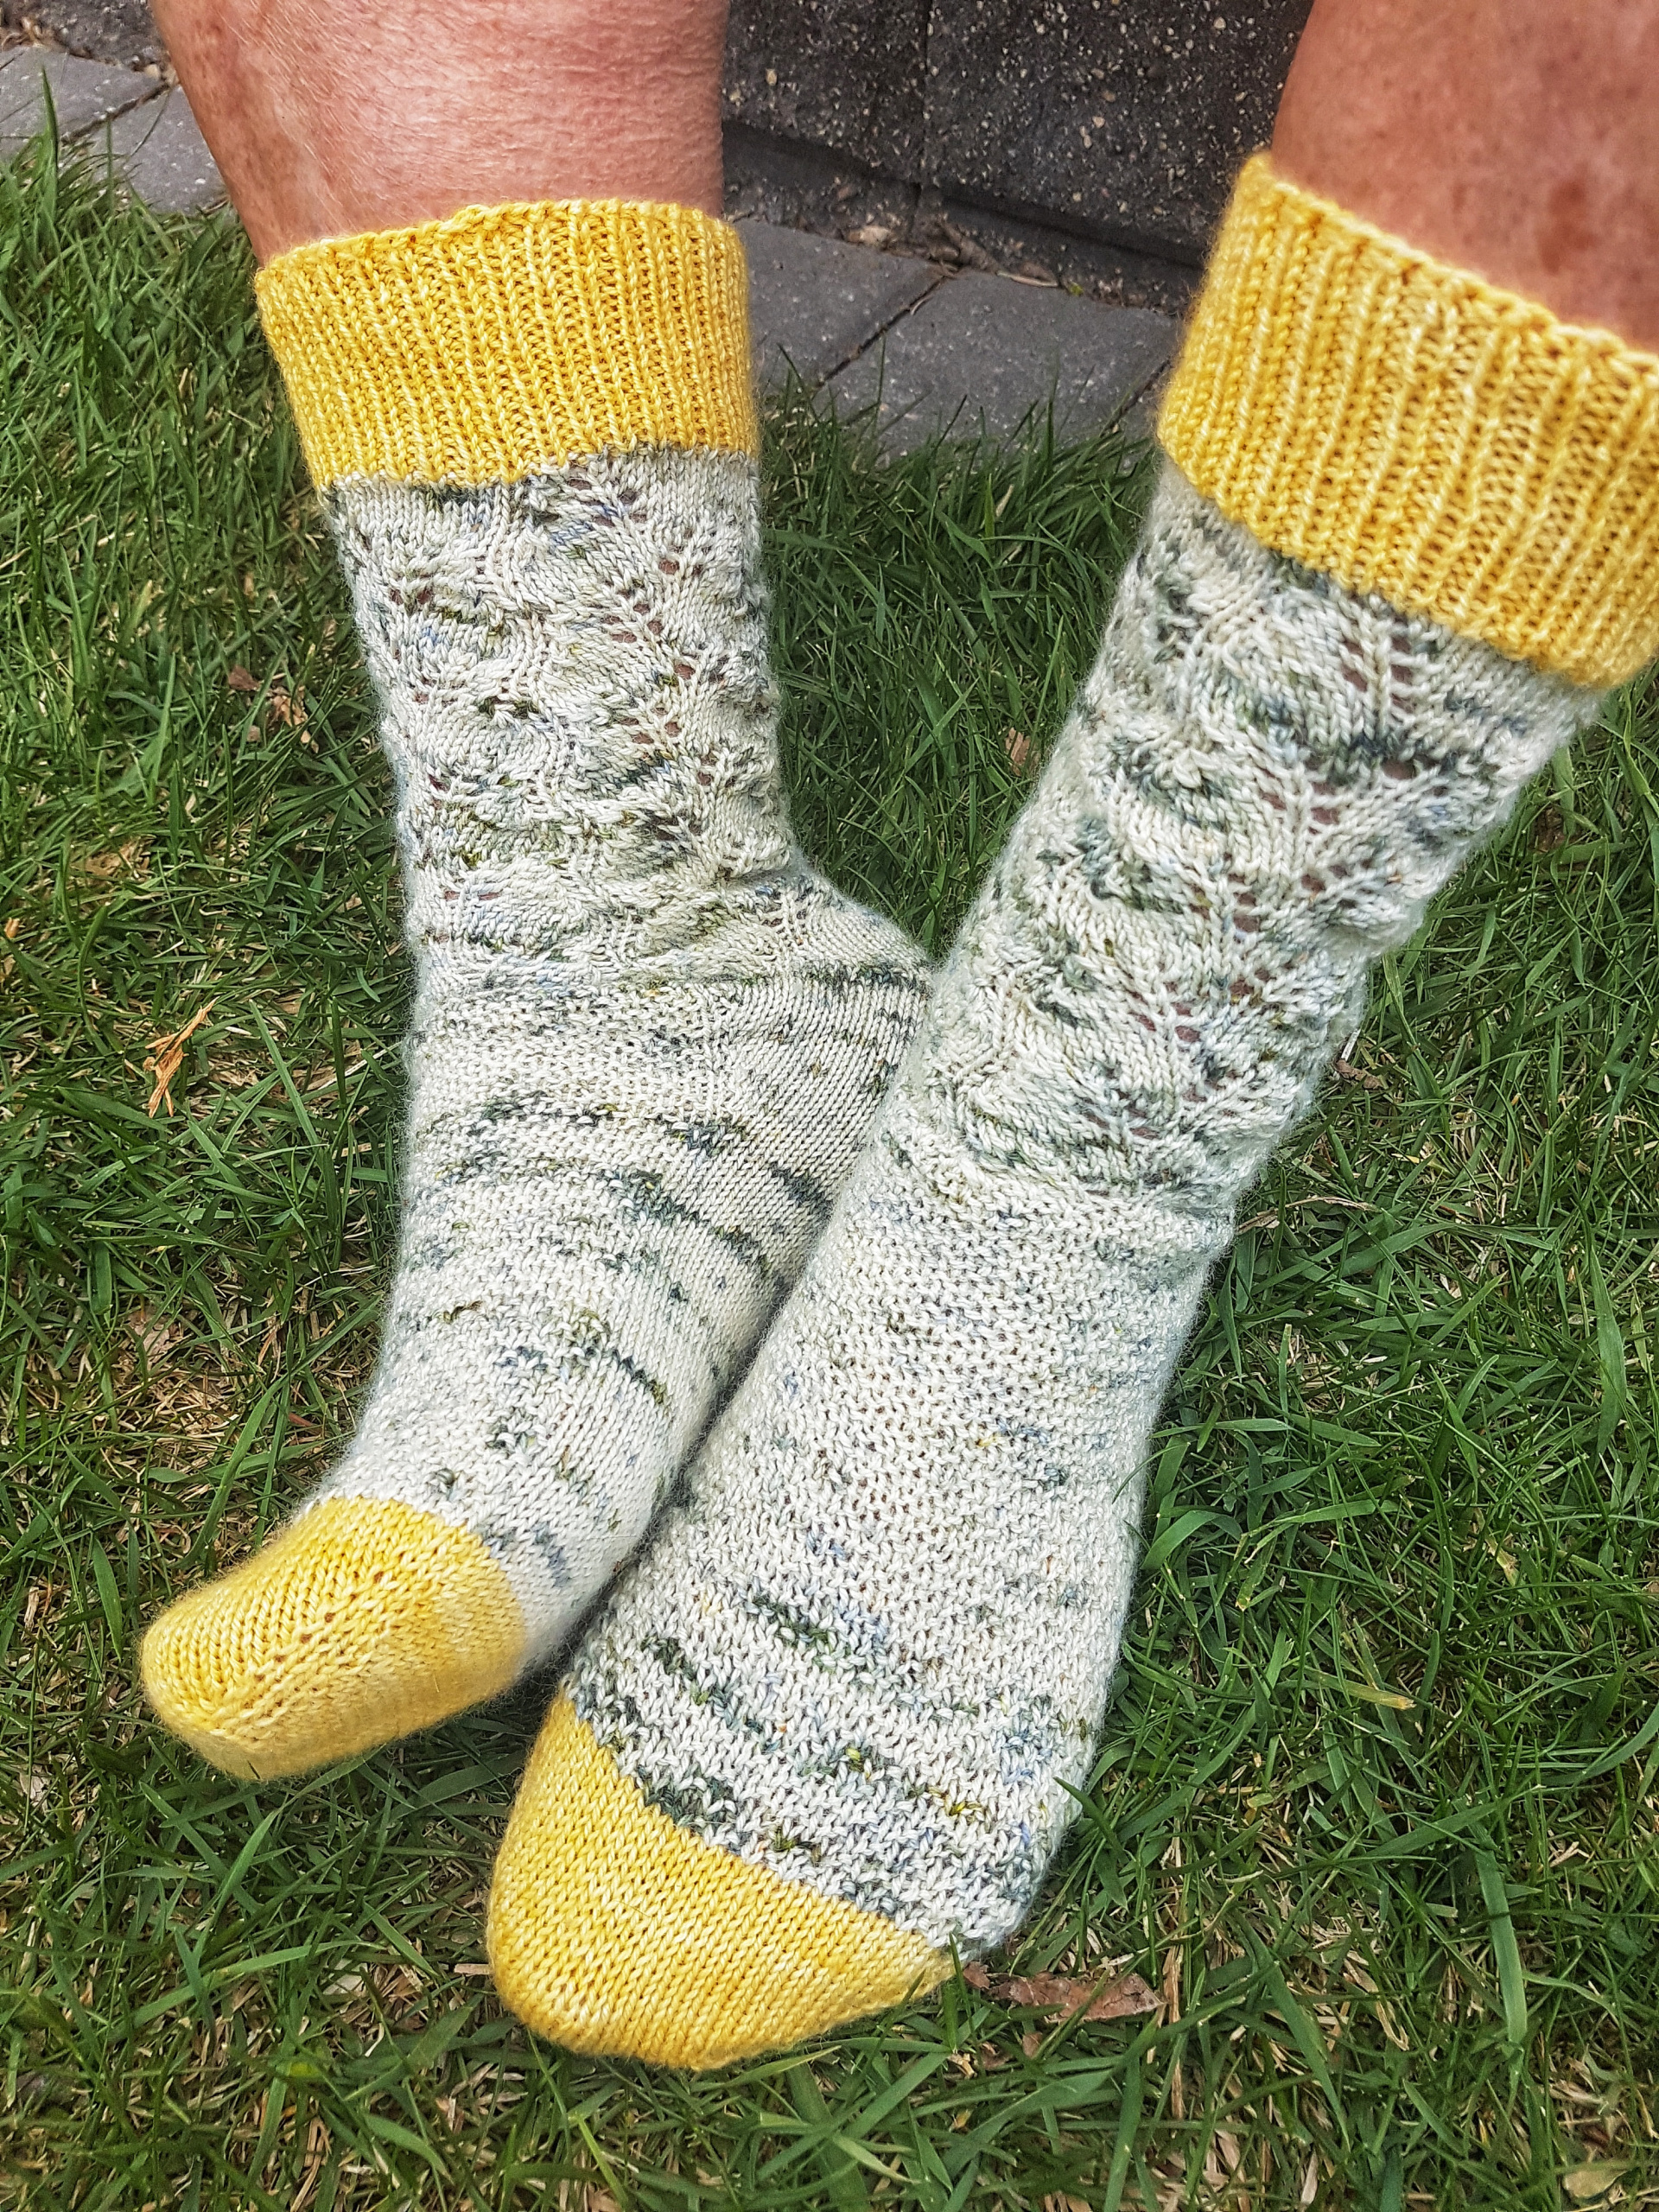 Toe Socks Knitting Pattern Knitting Pattern Straw Into Gold Toe Up Socks Fleegle Heel